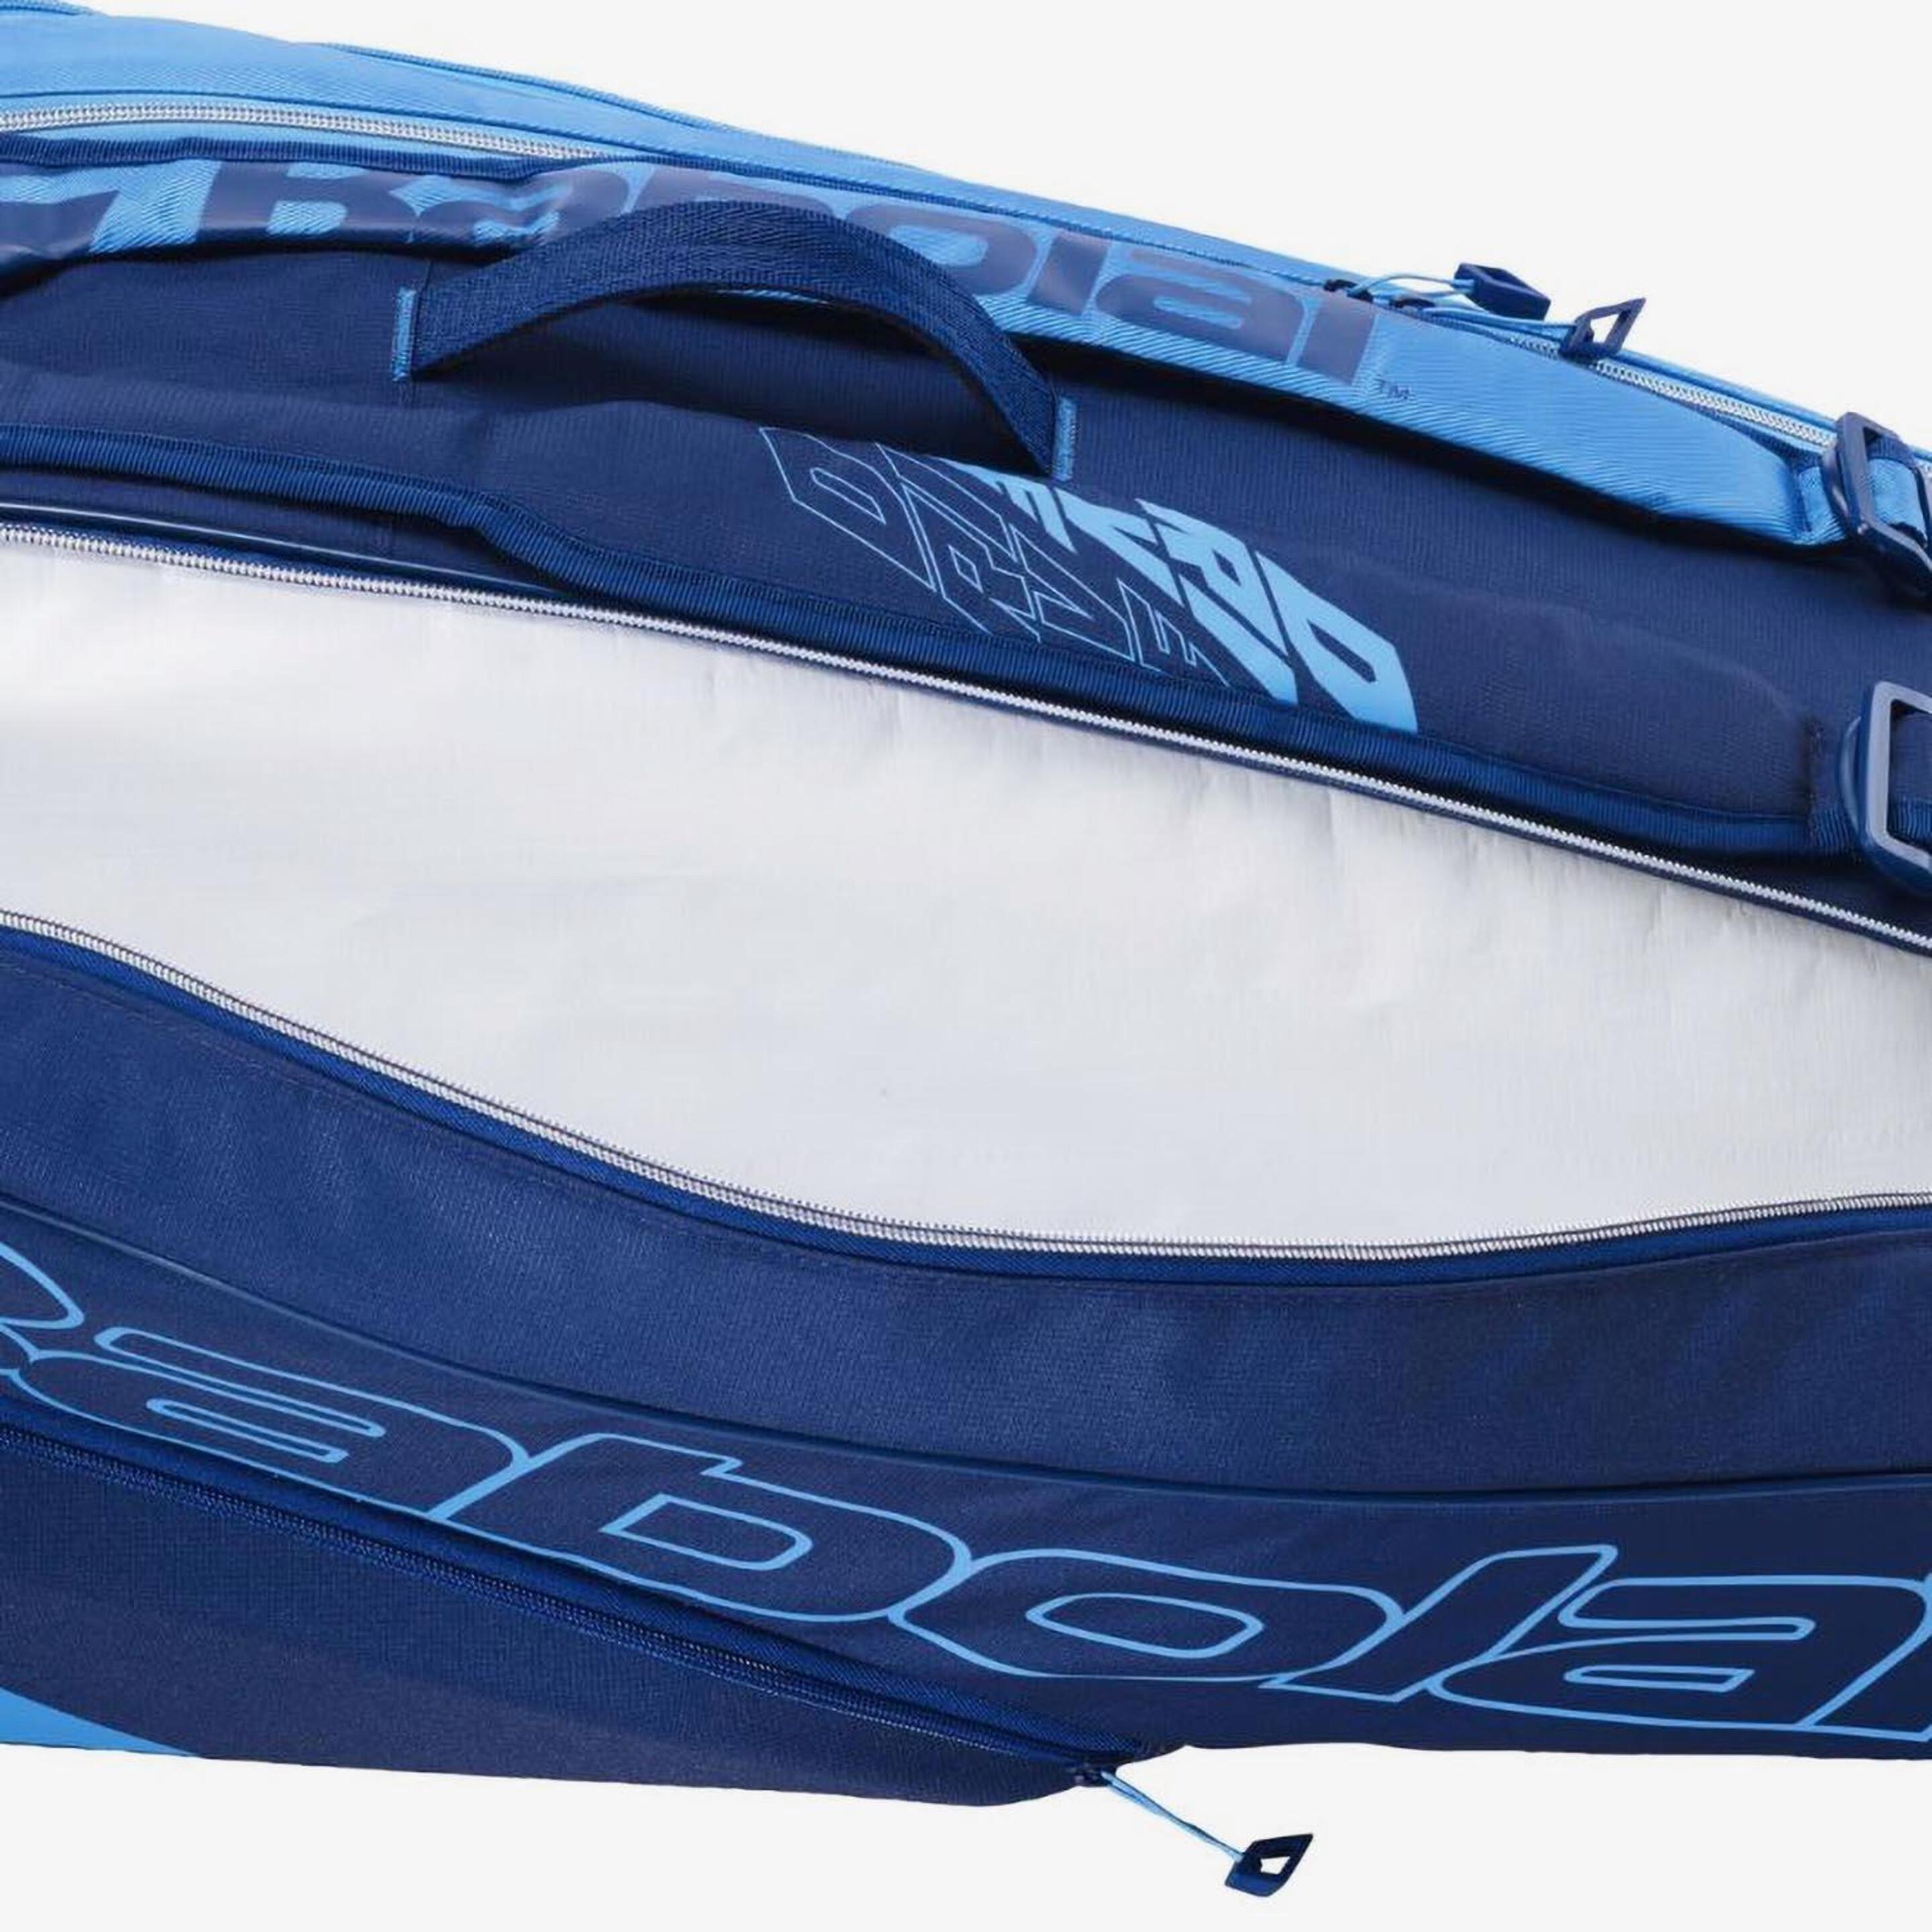 Babolat Pure Drive Rh6 - Azul - Saco Ténis Unissexo | Sport Zone